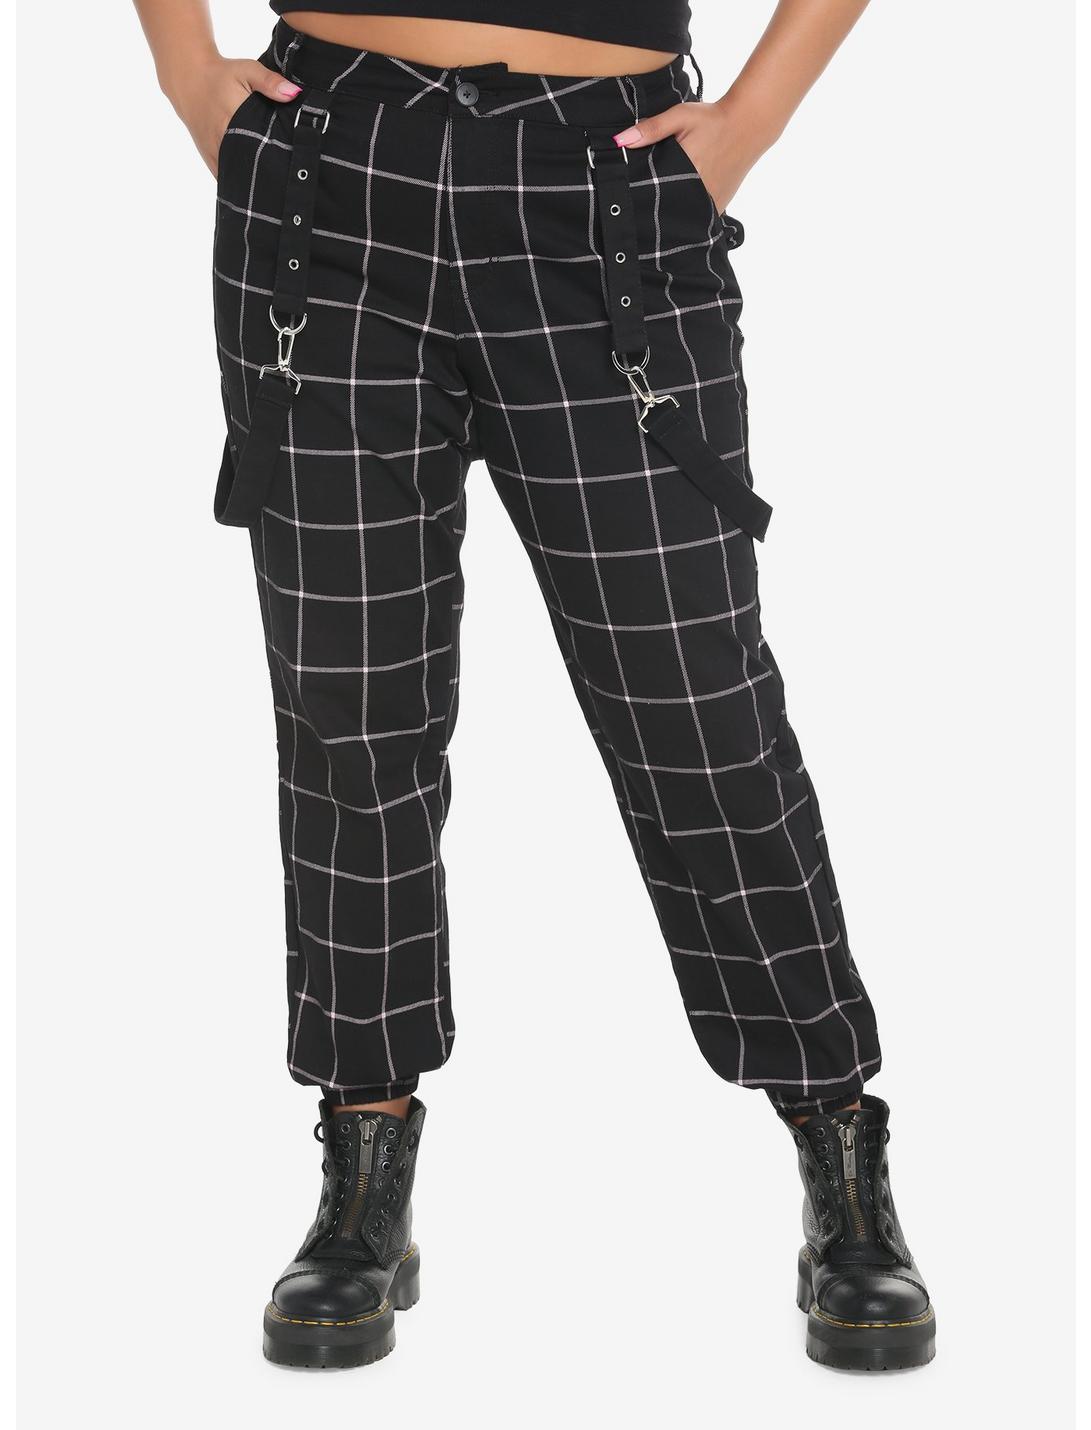 Black & Pink Grid Suspender Joggers Plus Size, BLACK  PINK, hi-res